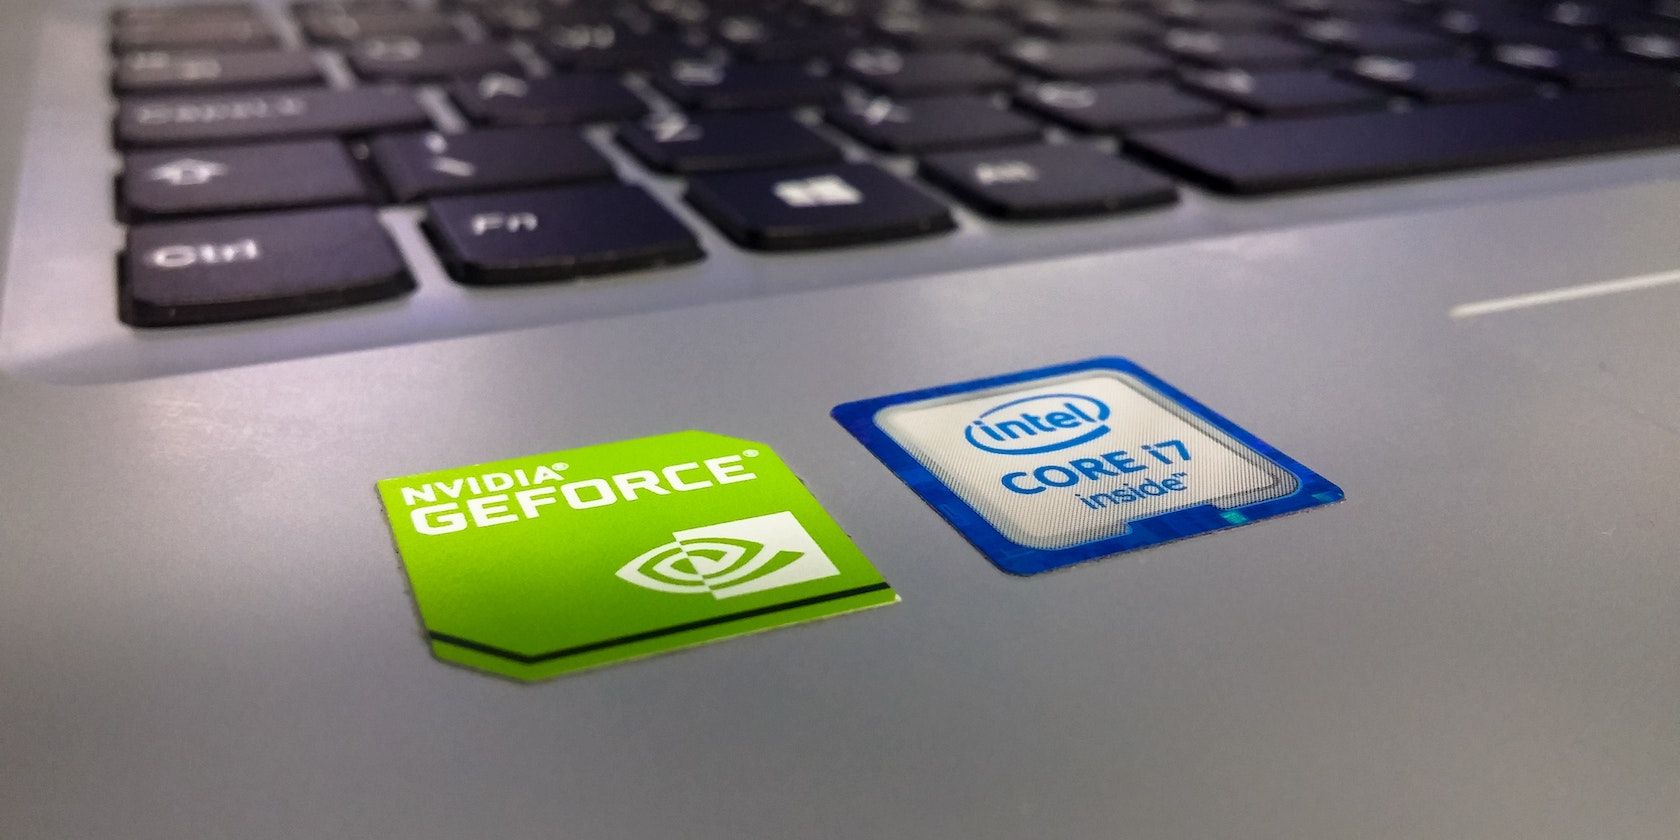 Image of NVIDIA GEFORCE logo sticker on a laptop 